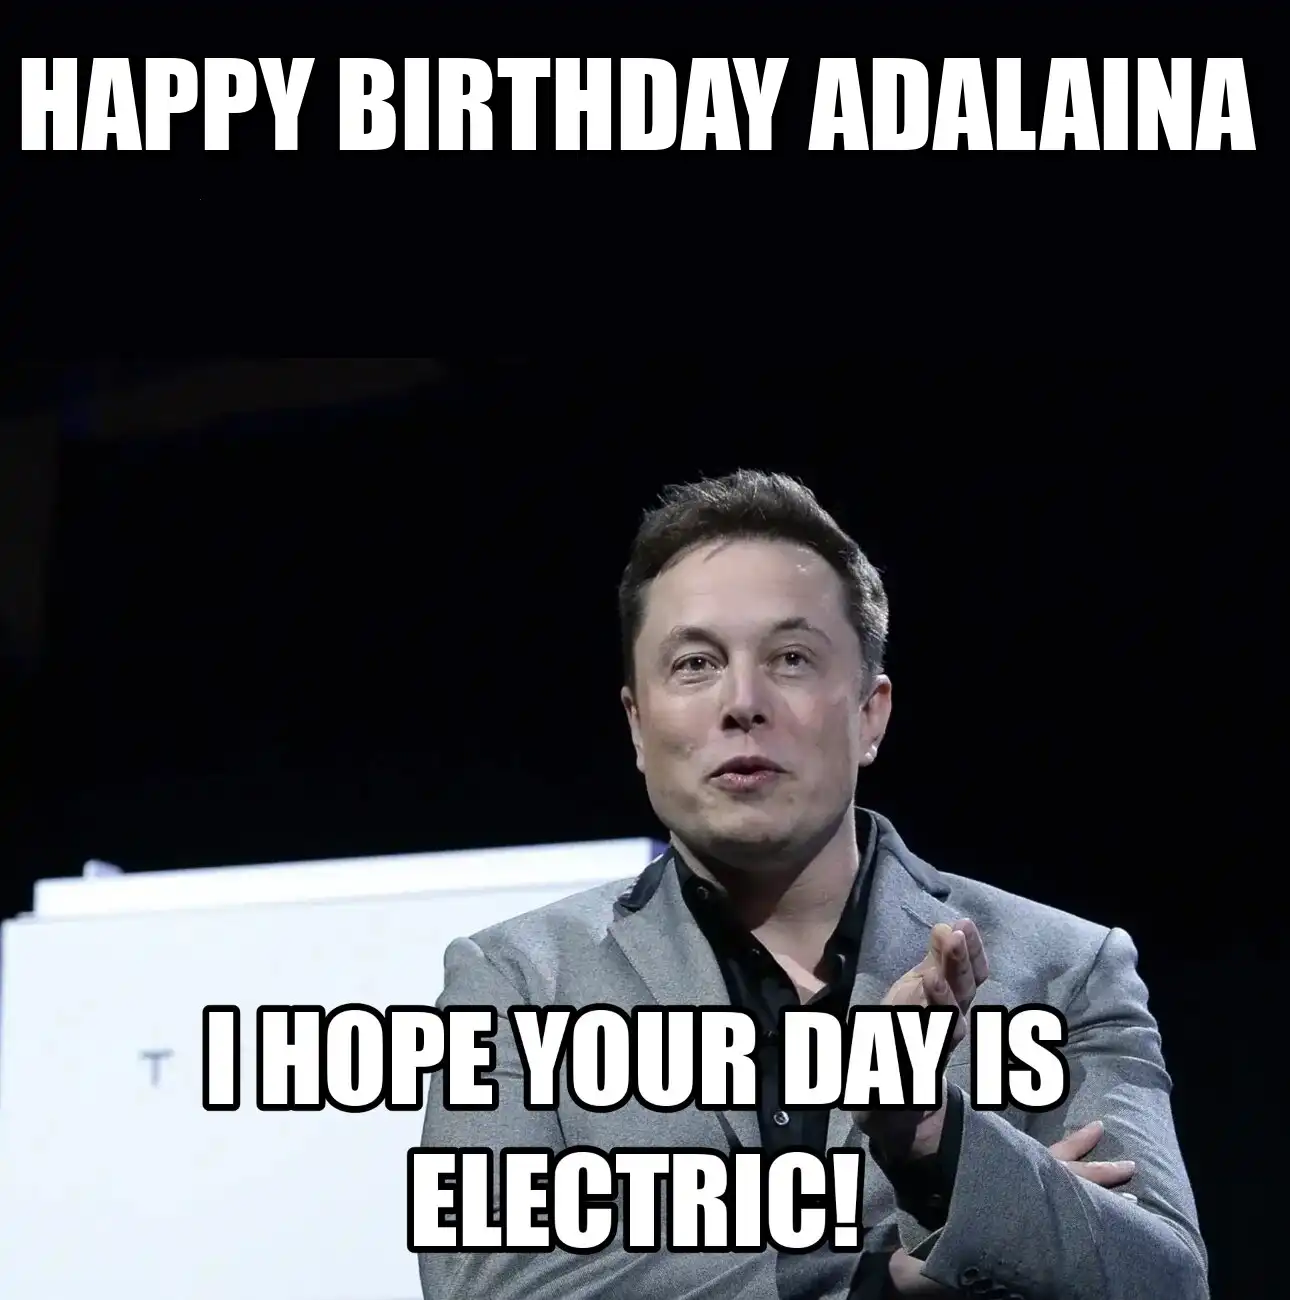 Happy Birthday Adalaina I Hope Your Day Is Electric Meme